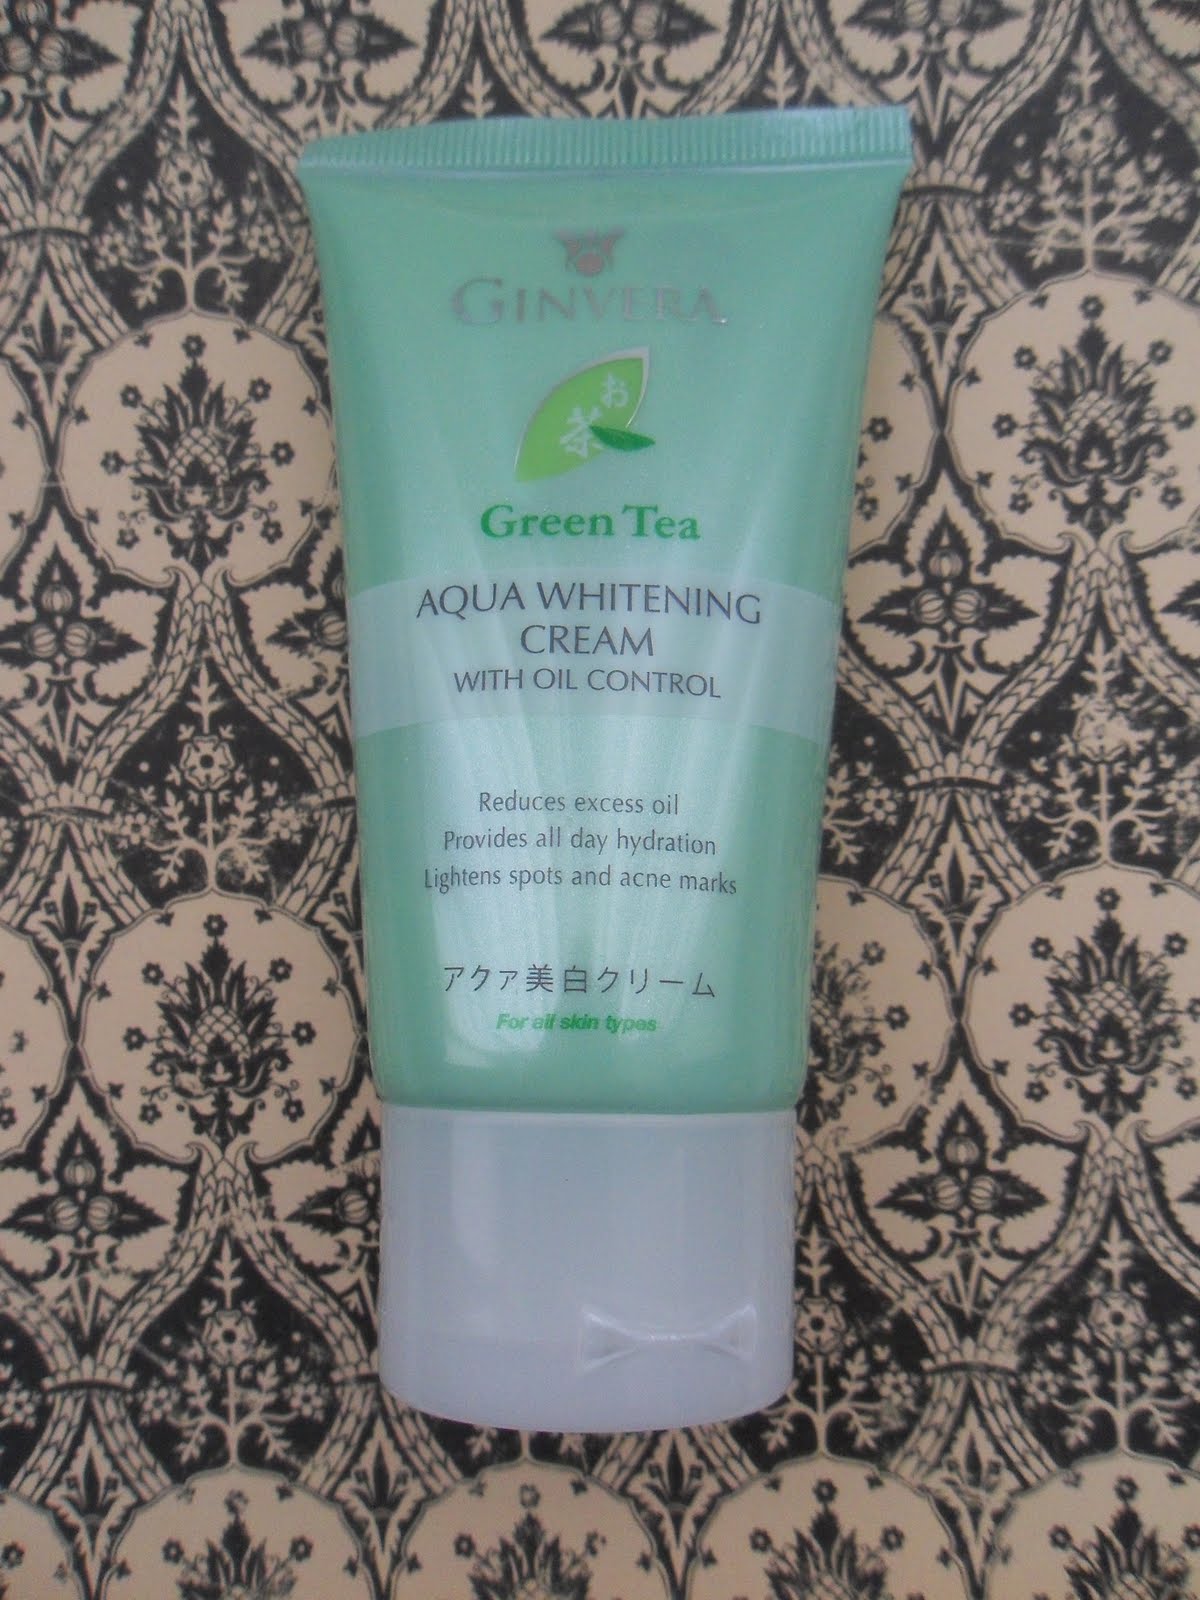 Sleepy Lah : Ginvera Green Tea Aqua Whitening Cream and 